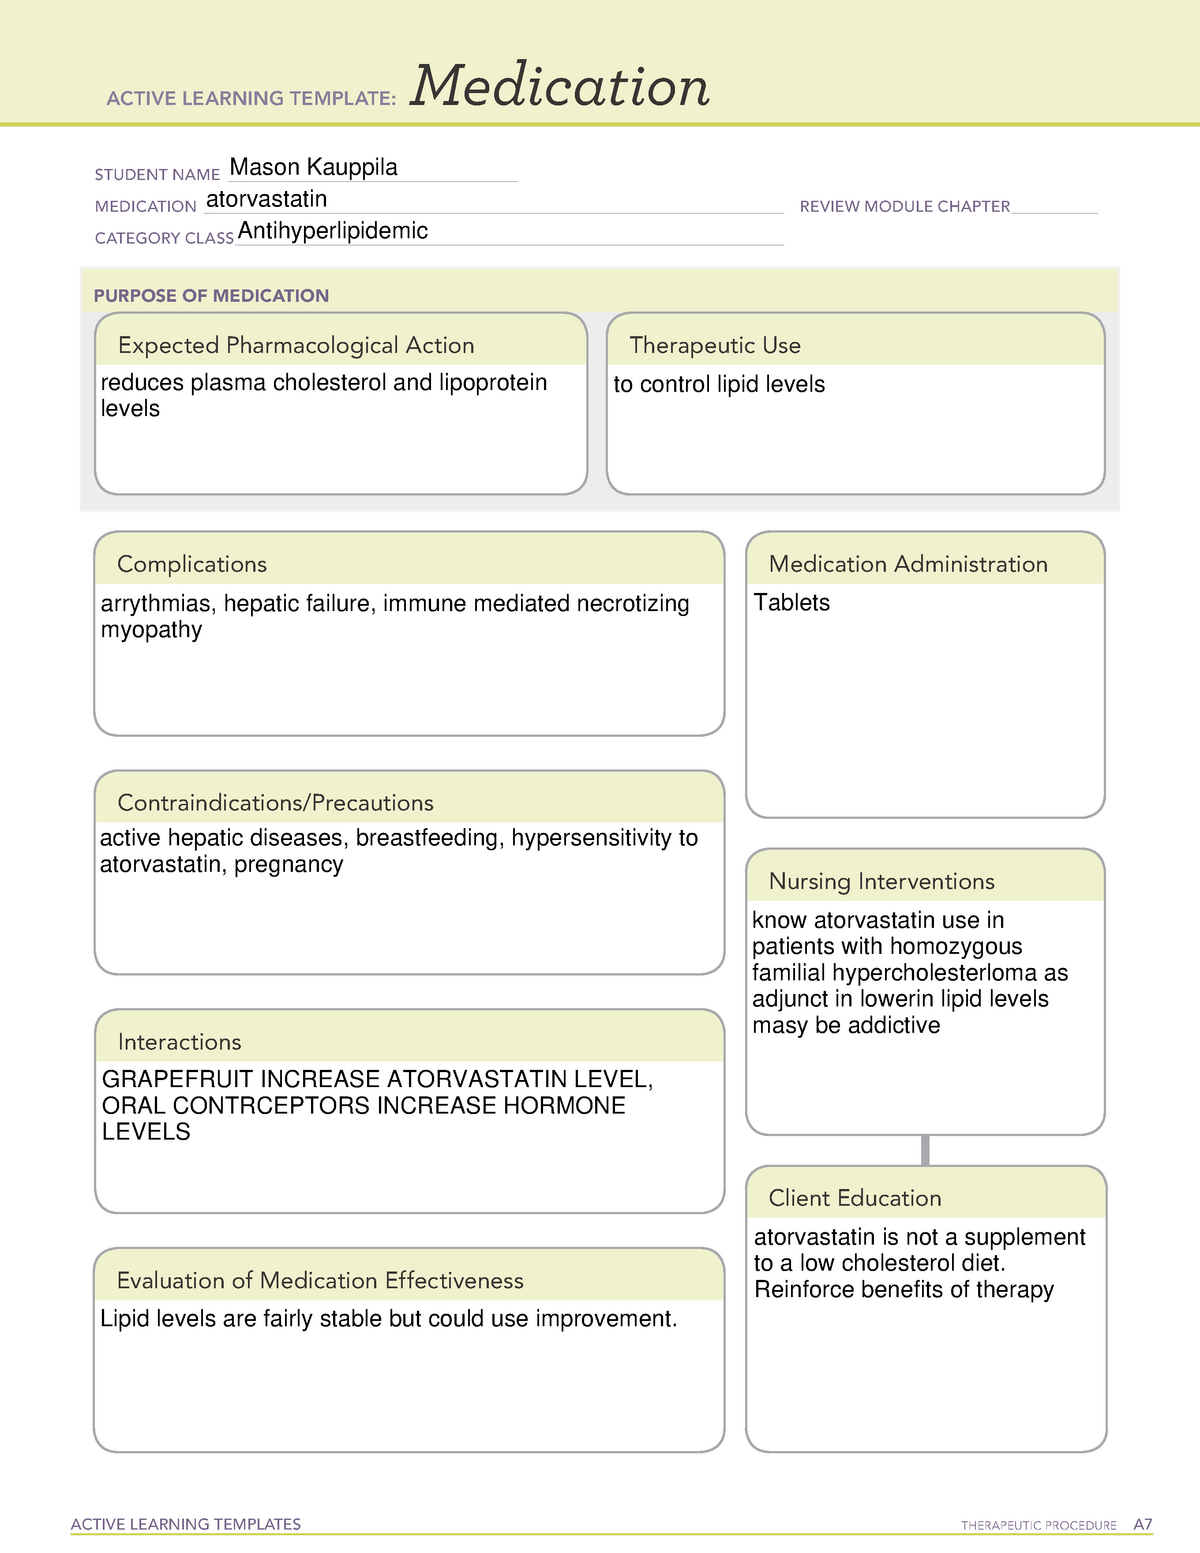 atorvastatin-medication-active-learning-template-nurs200-studocu